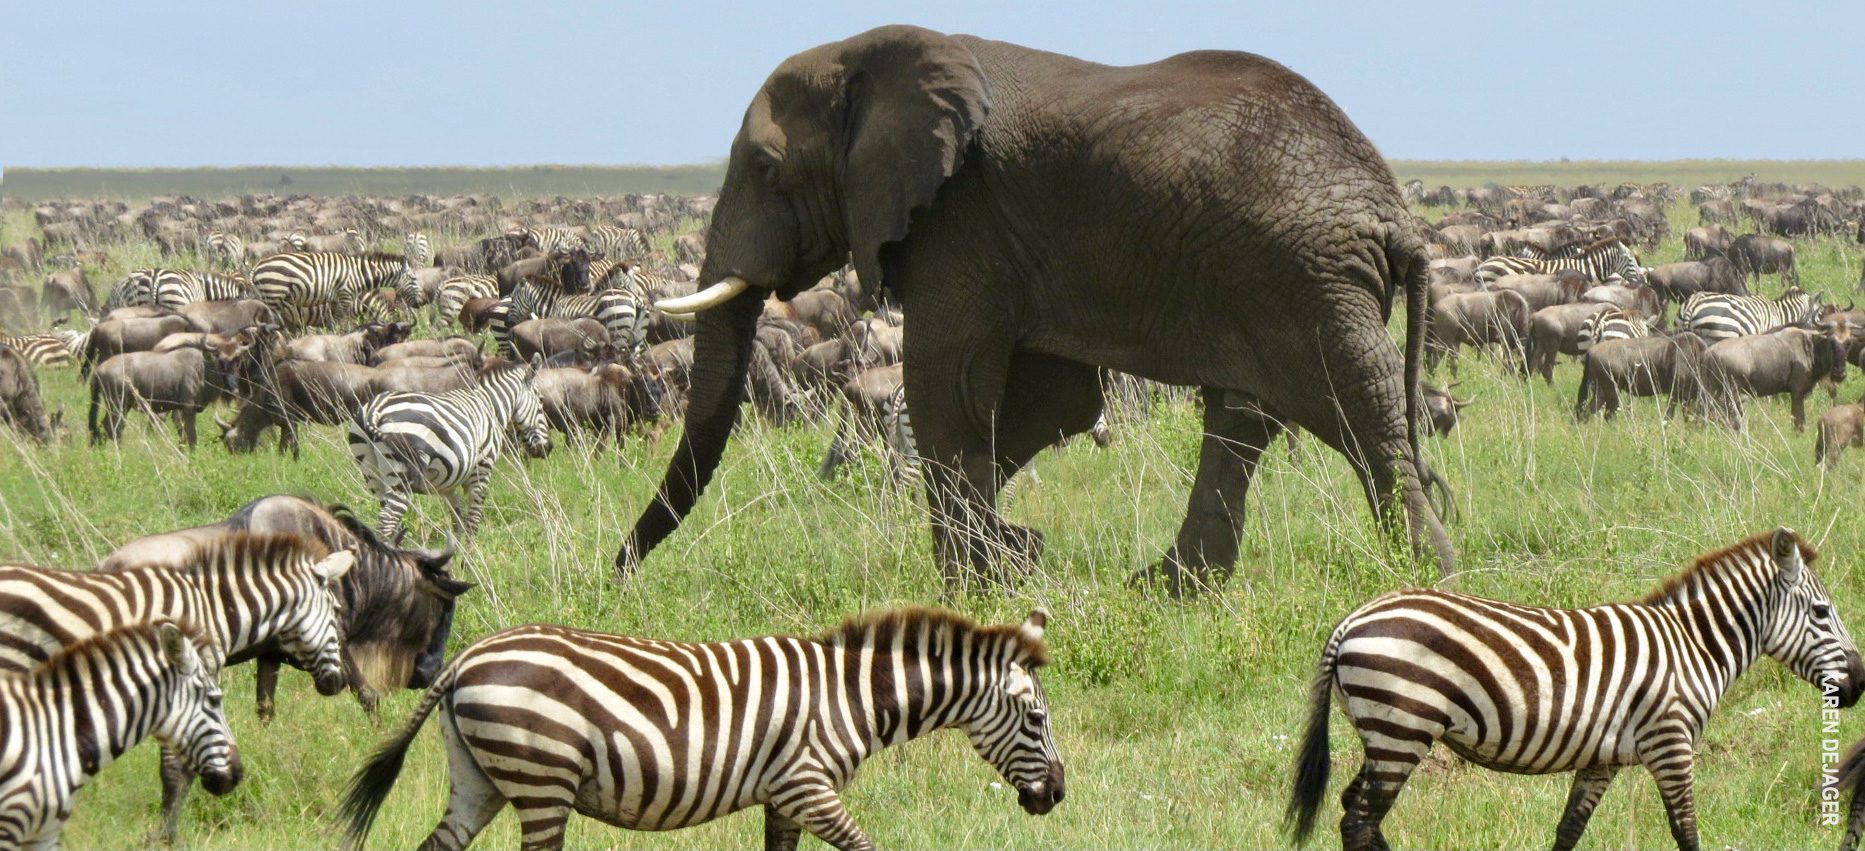 great migration and elephant in serengeti tanzania